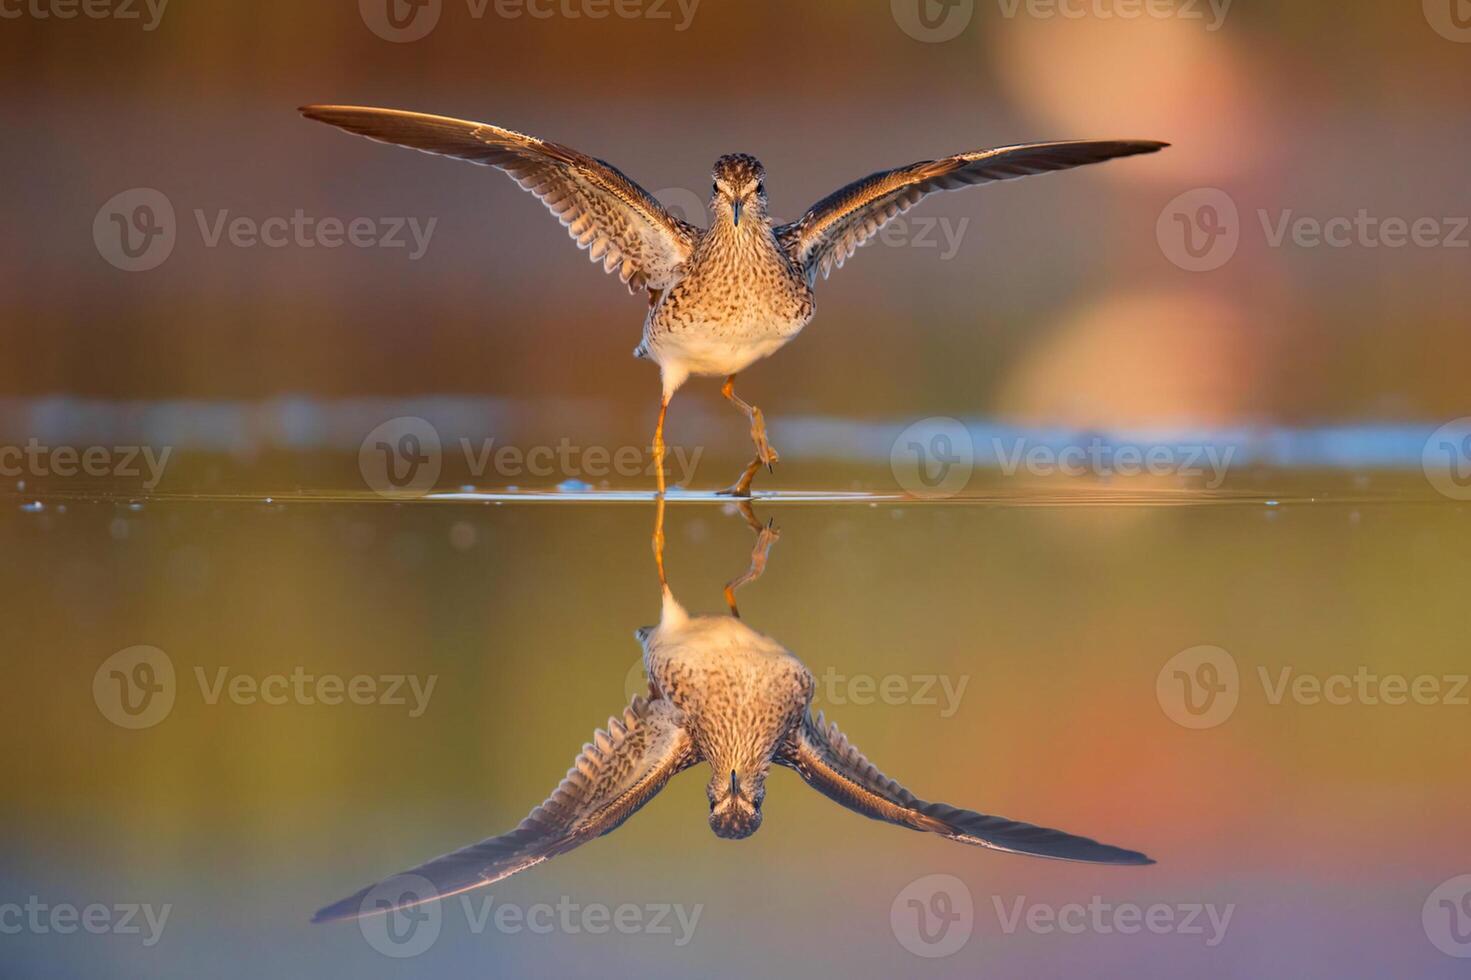 Bird Photography, Bird Picture, Most Beautiful Bird Photography, Nature Photography photo